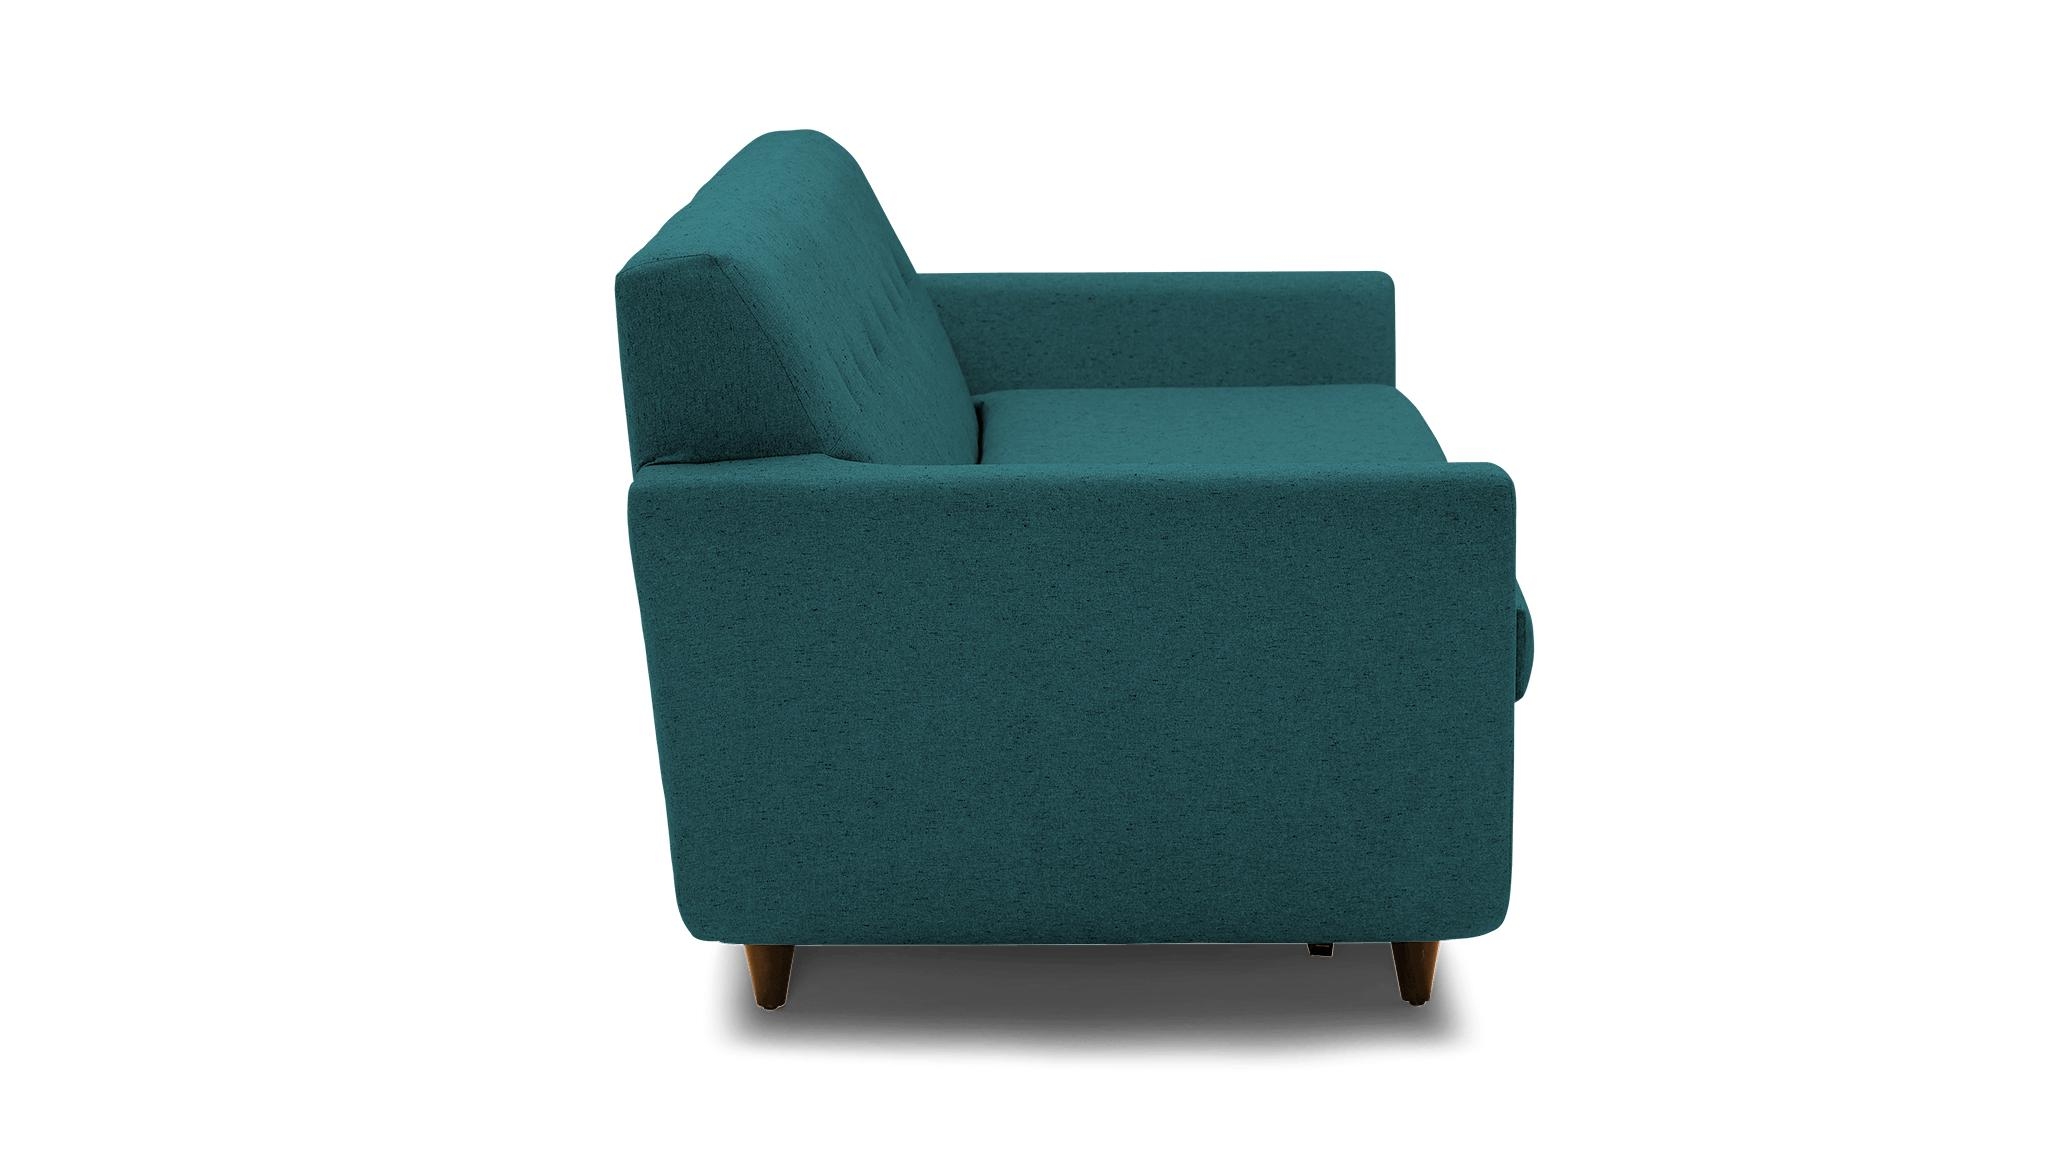 Blue Hughes Mid Century Modern Sleeper Sofa - Royale Peacock  - Mocha - Image 2